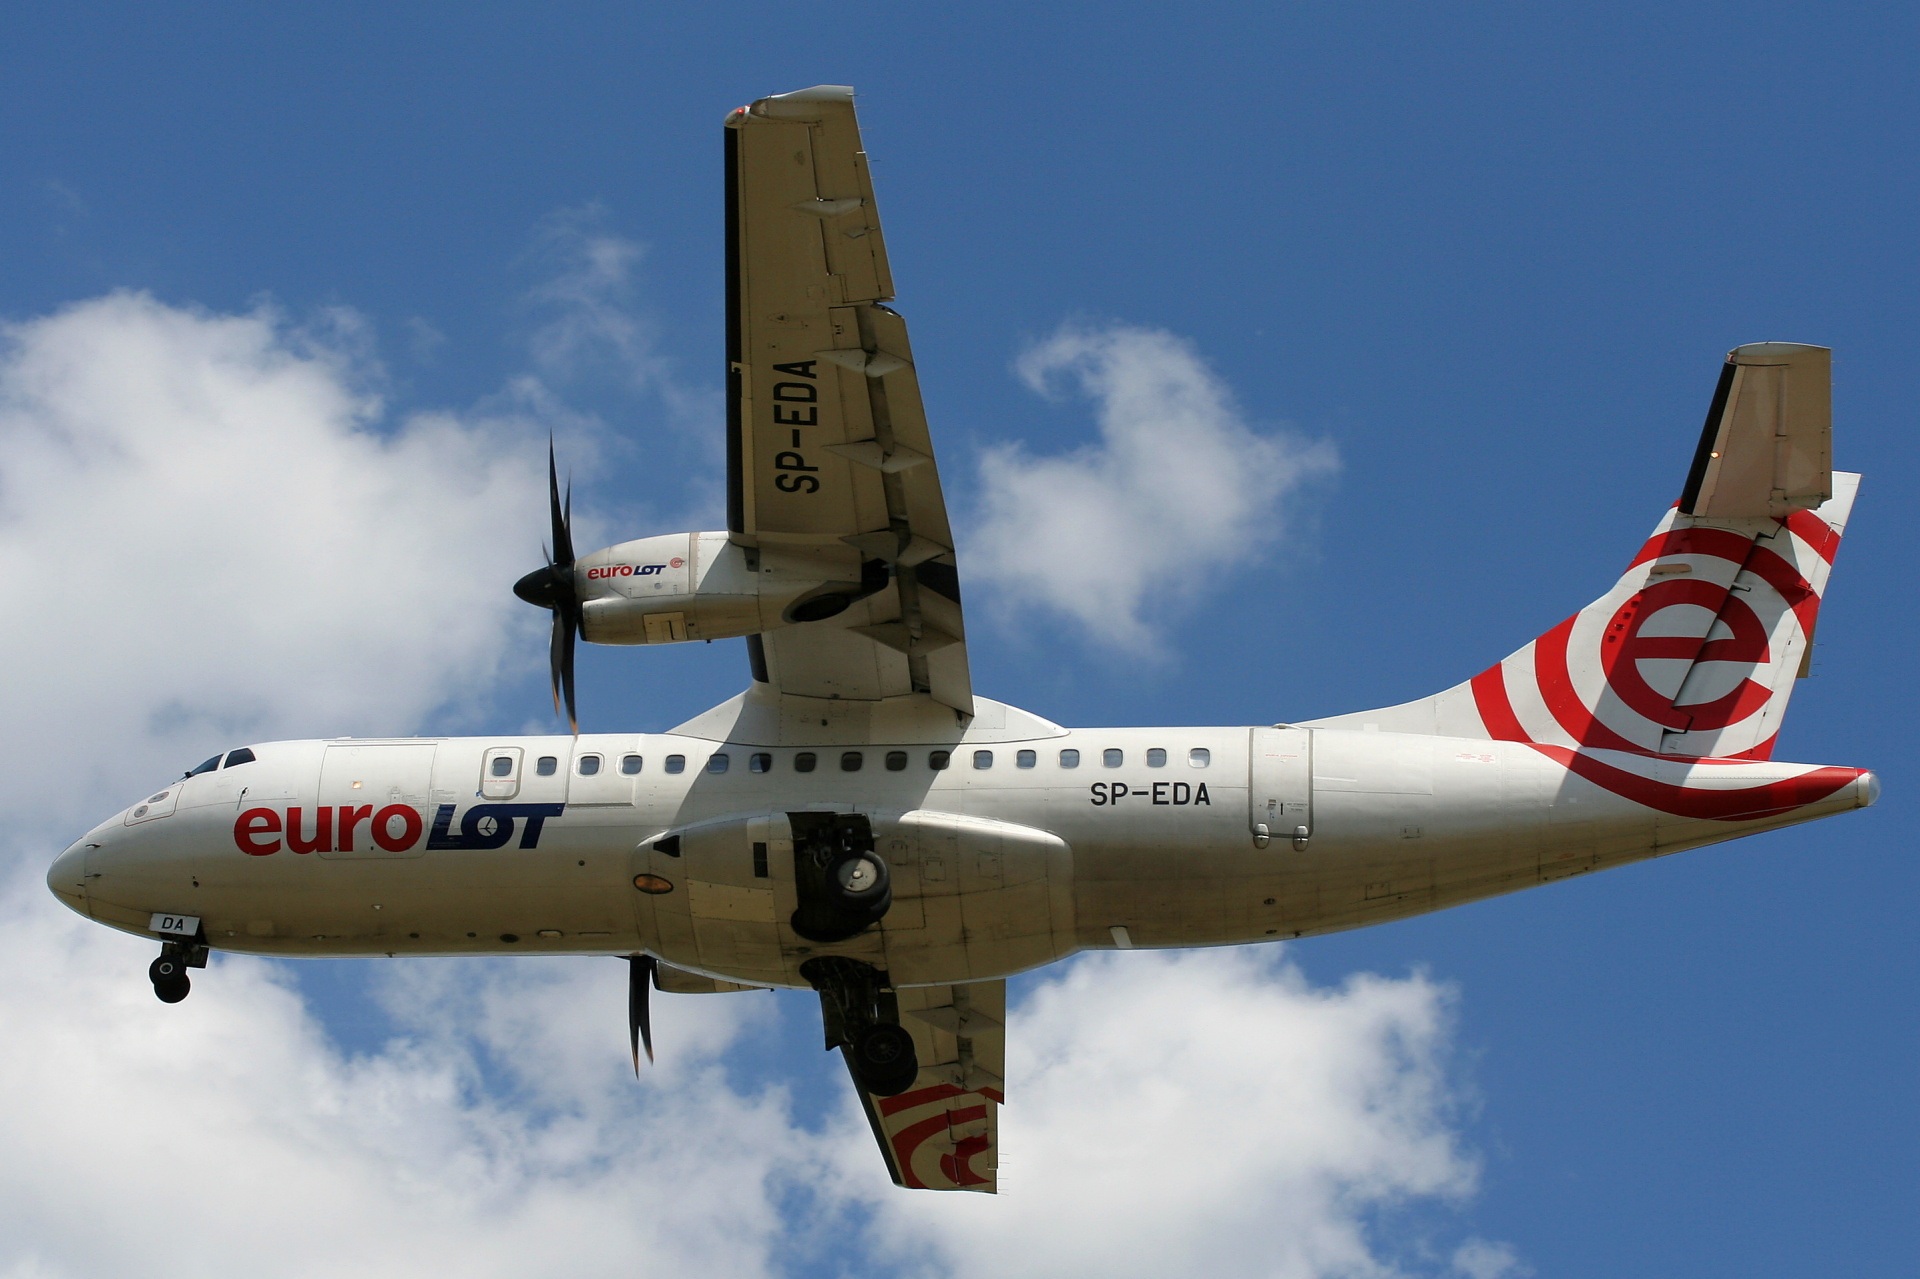 SP-EDA (Samoloty » Spotting na EPWA » ATR 42 » EuroLOT)